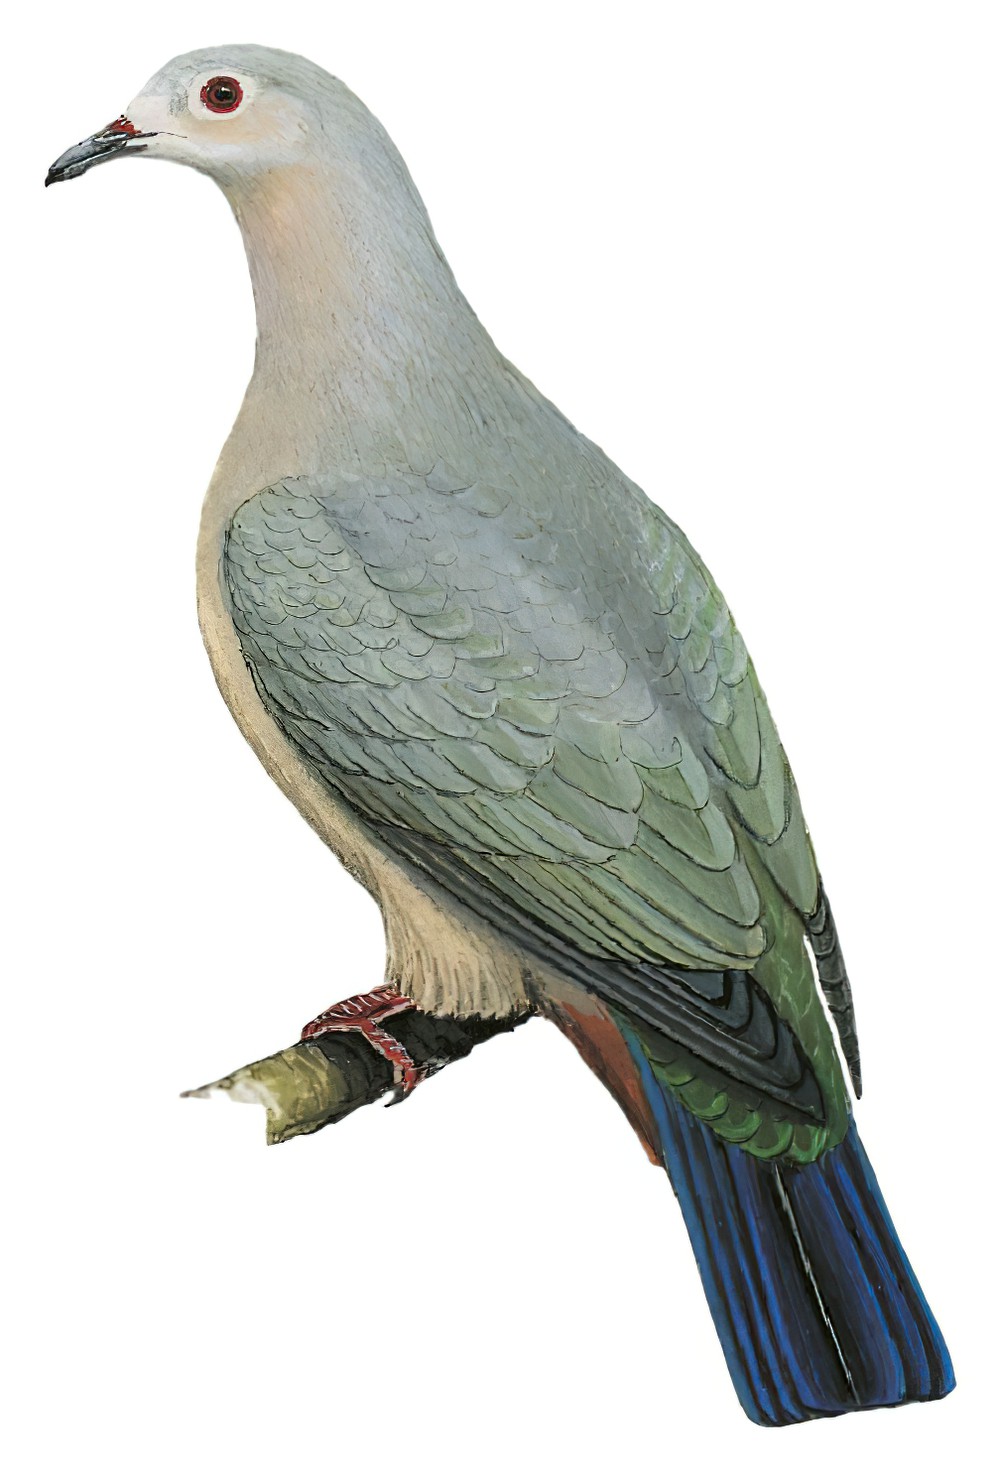 Island Imperial-Pigeon / Ducula pistrinaria